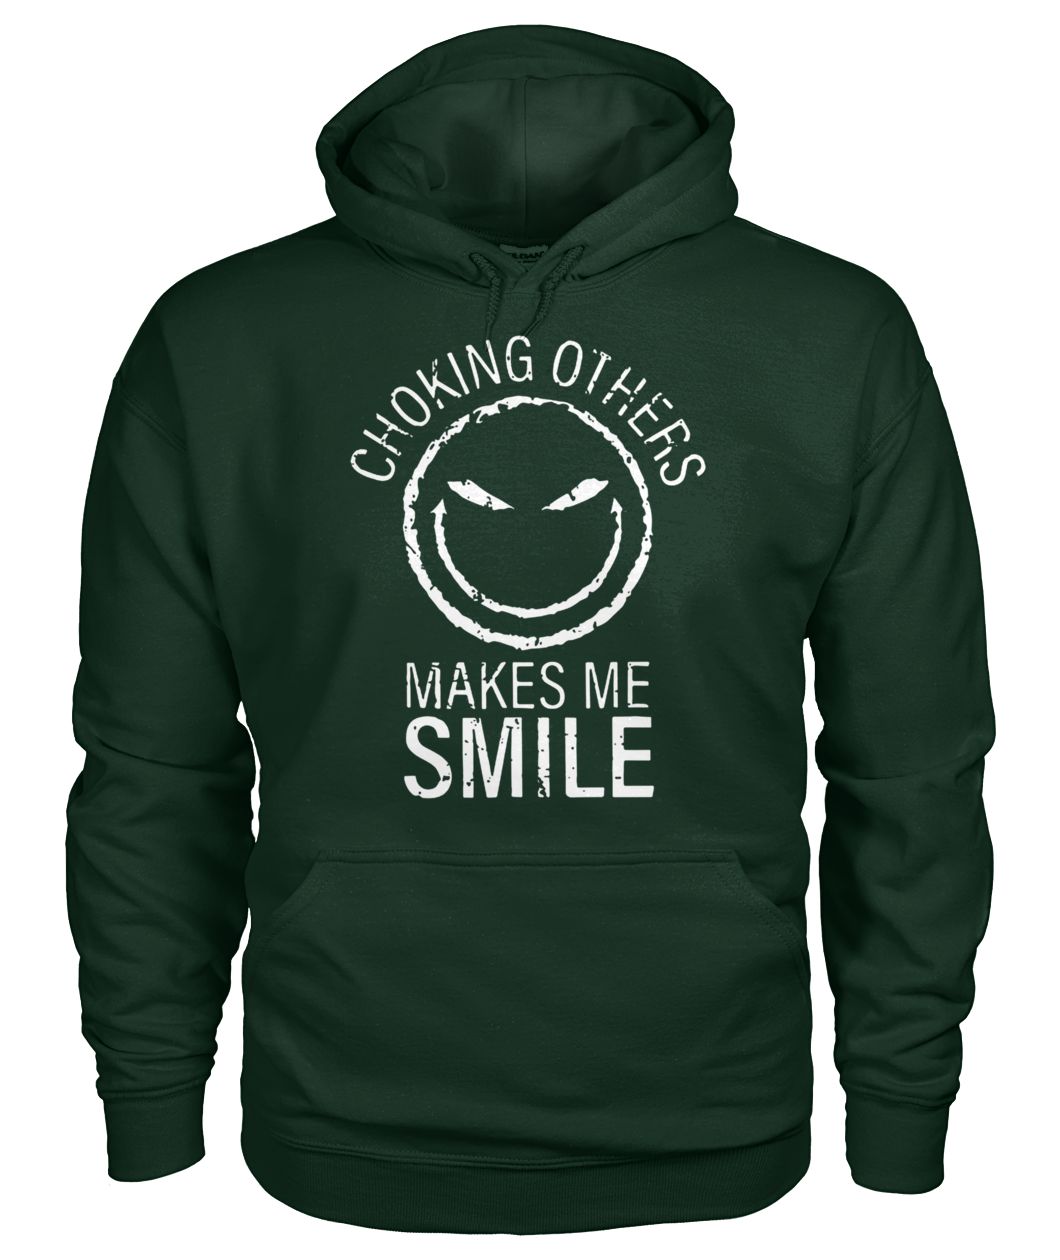 Choking others makes me smile gildan hoodie